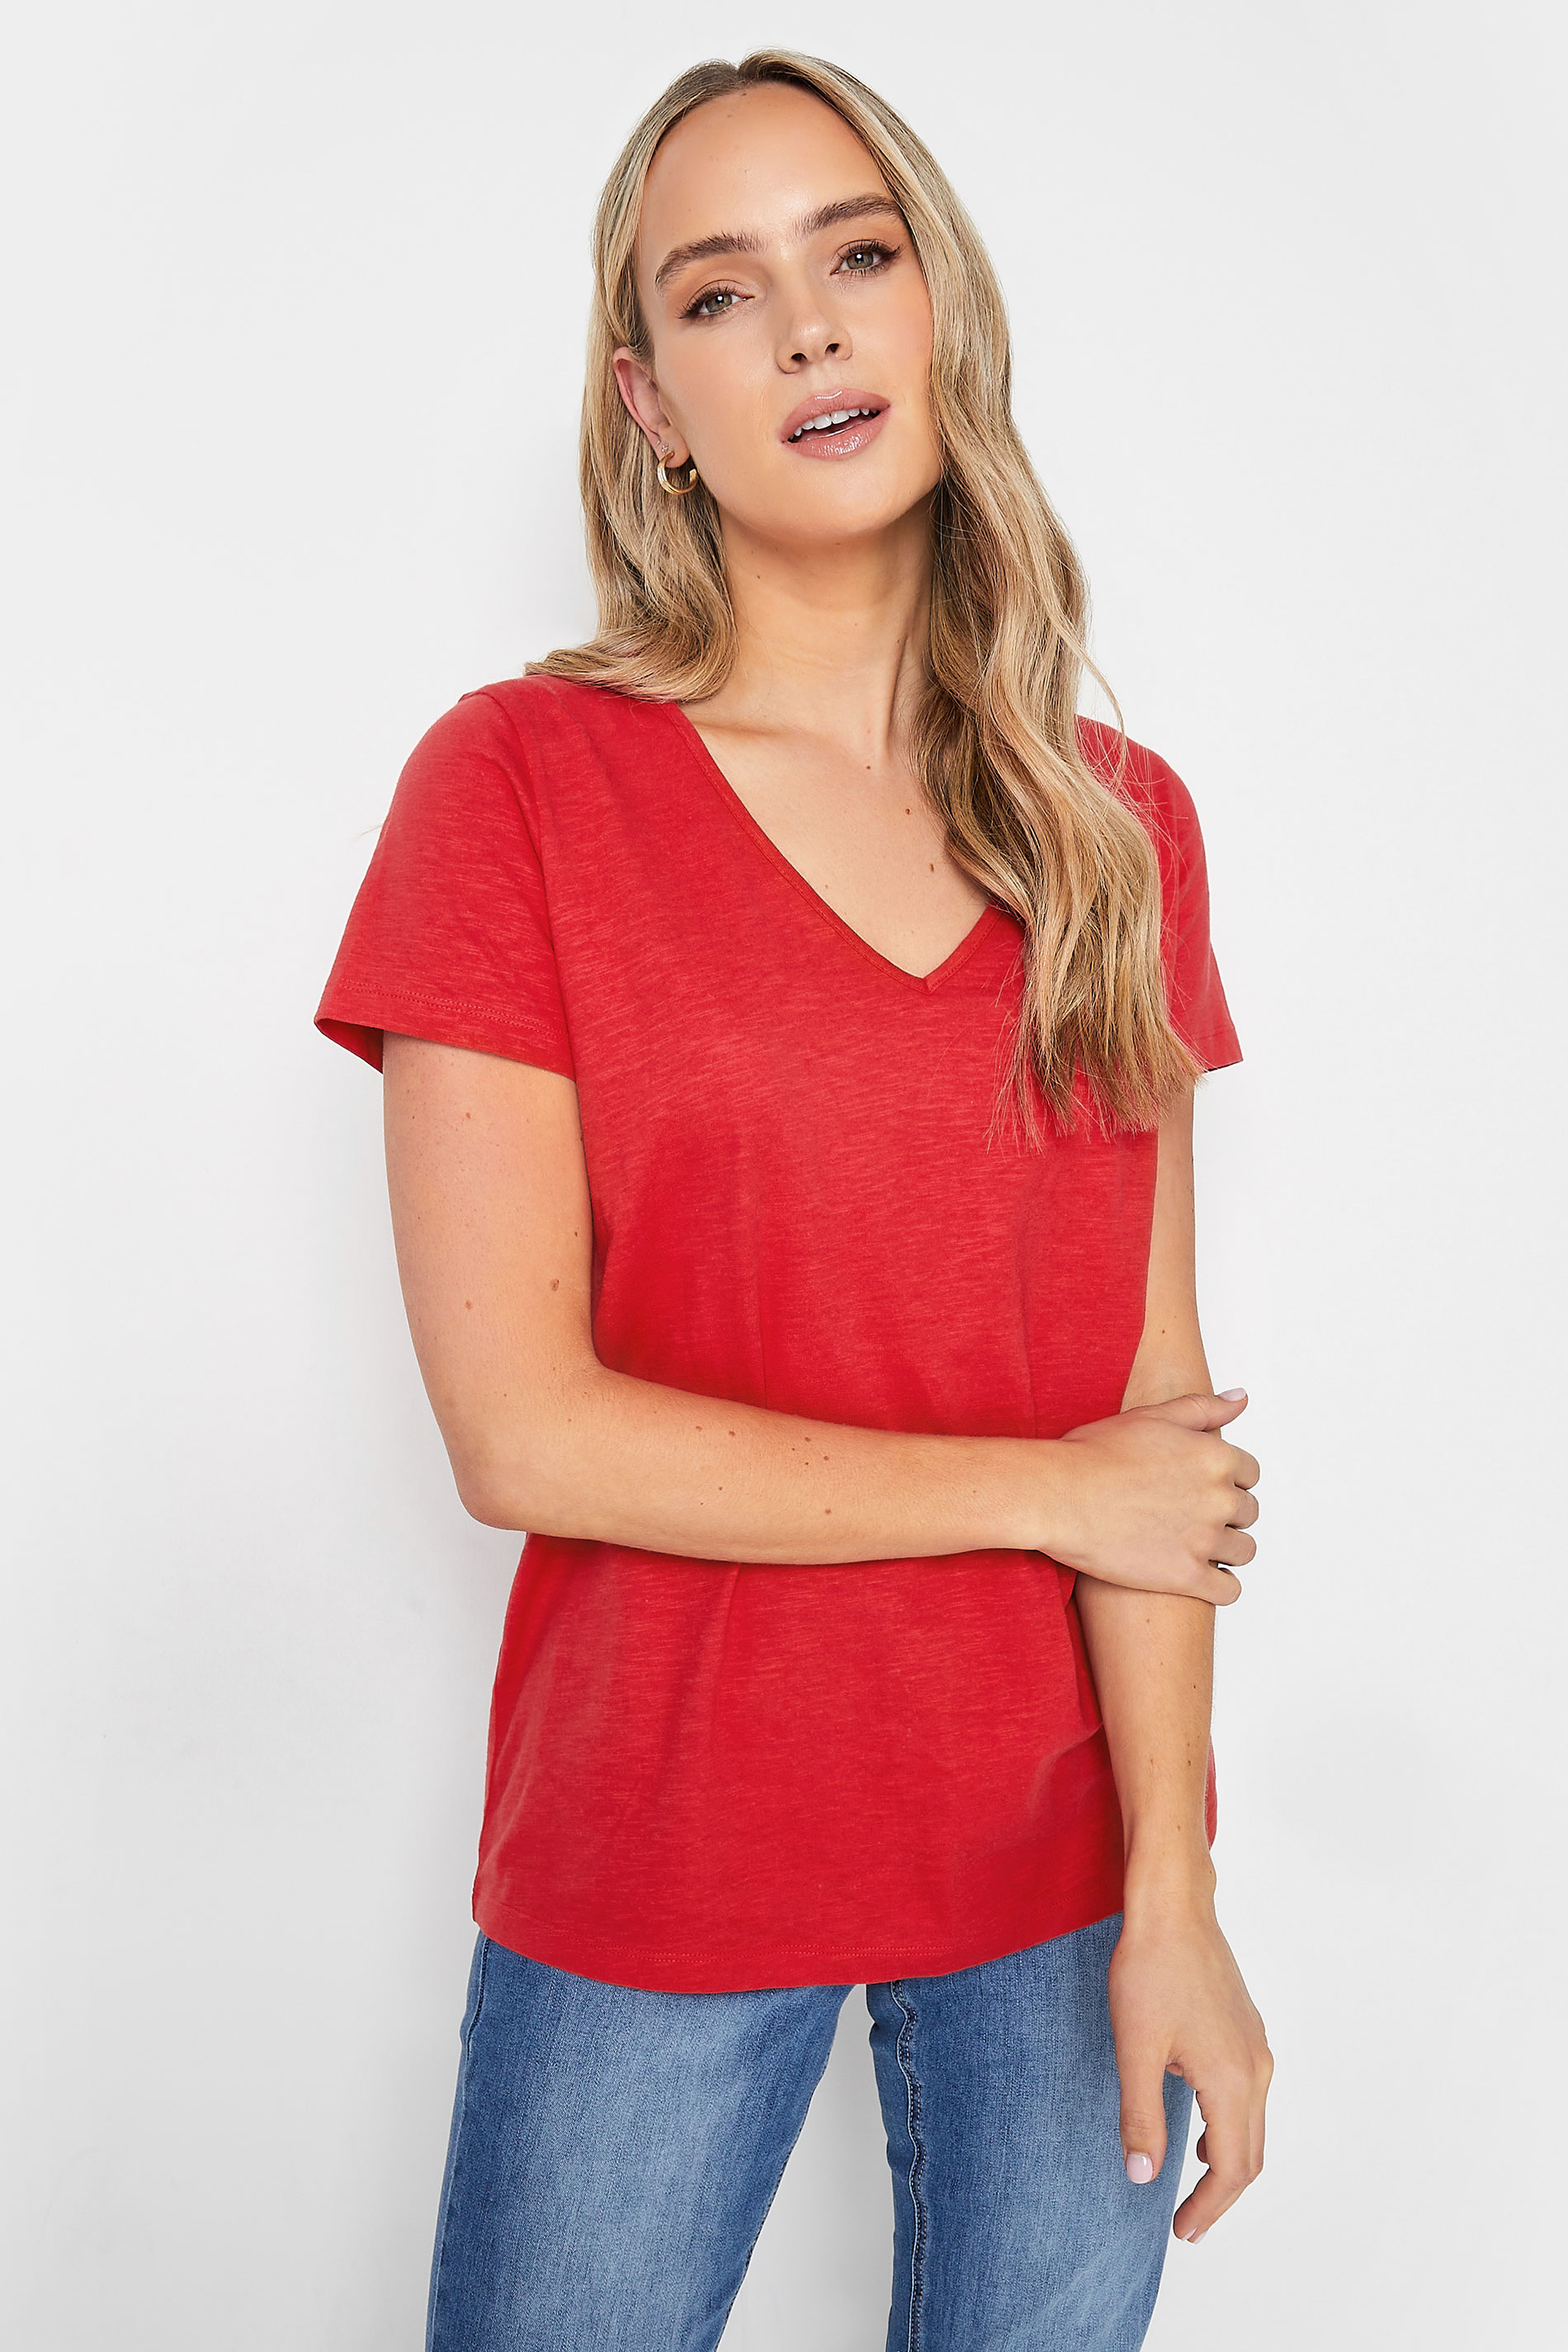 LTS Tall Women's Red V-Neck T-Shirt | Long Tall Sally 1